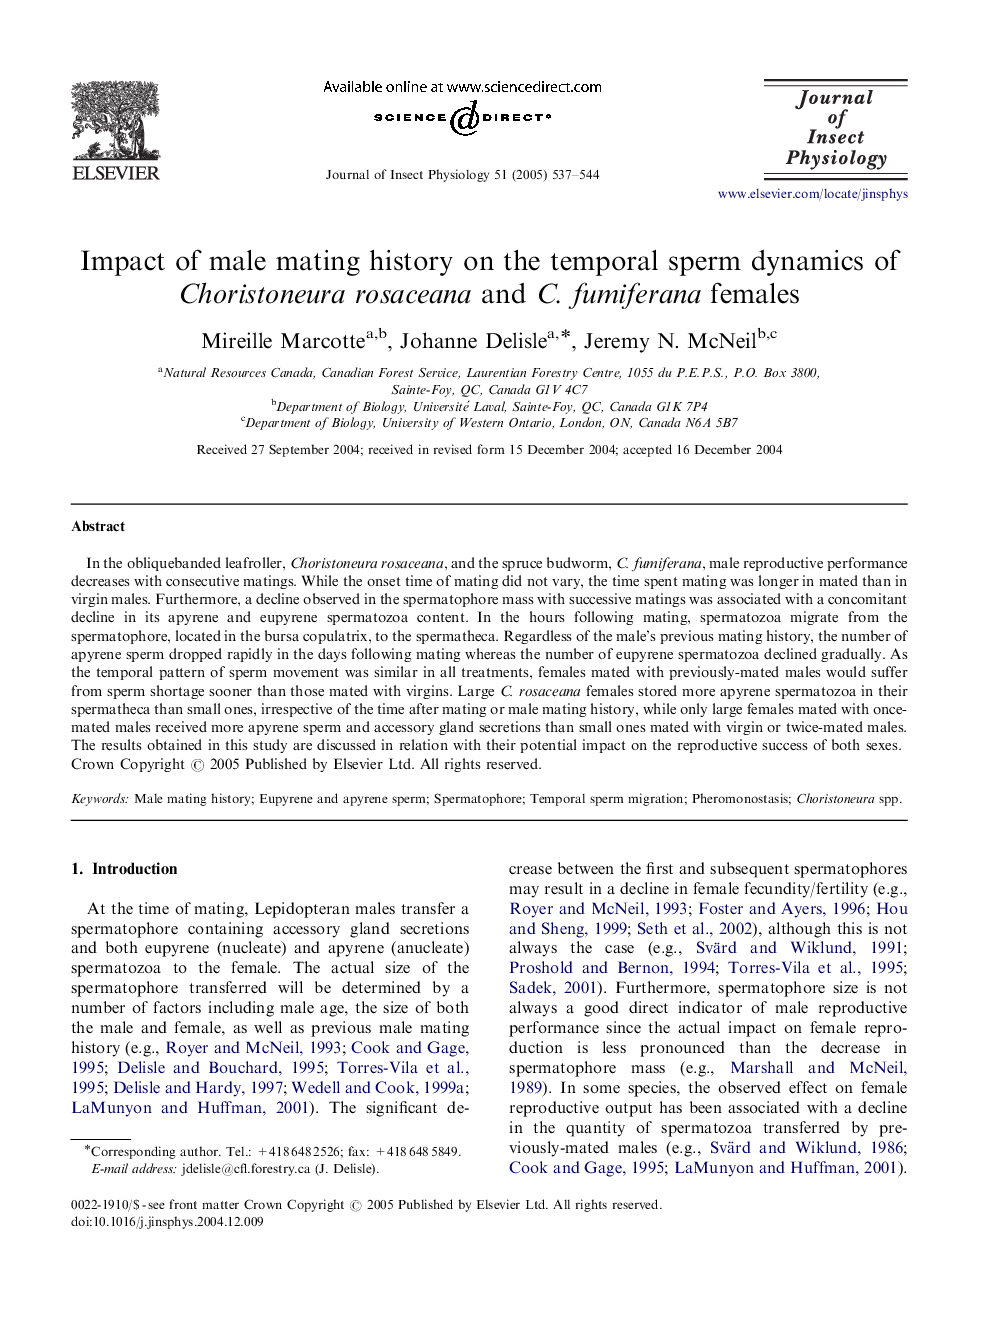 Impact of male mating history on the temporal sperm dynamics of Choristoneura rosaceana and C. fumiferana females